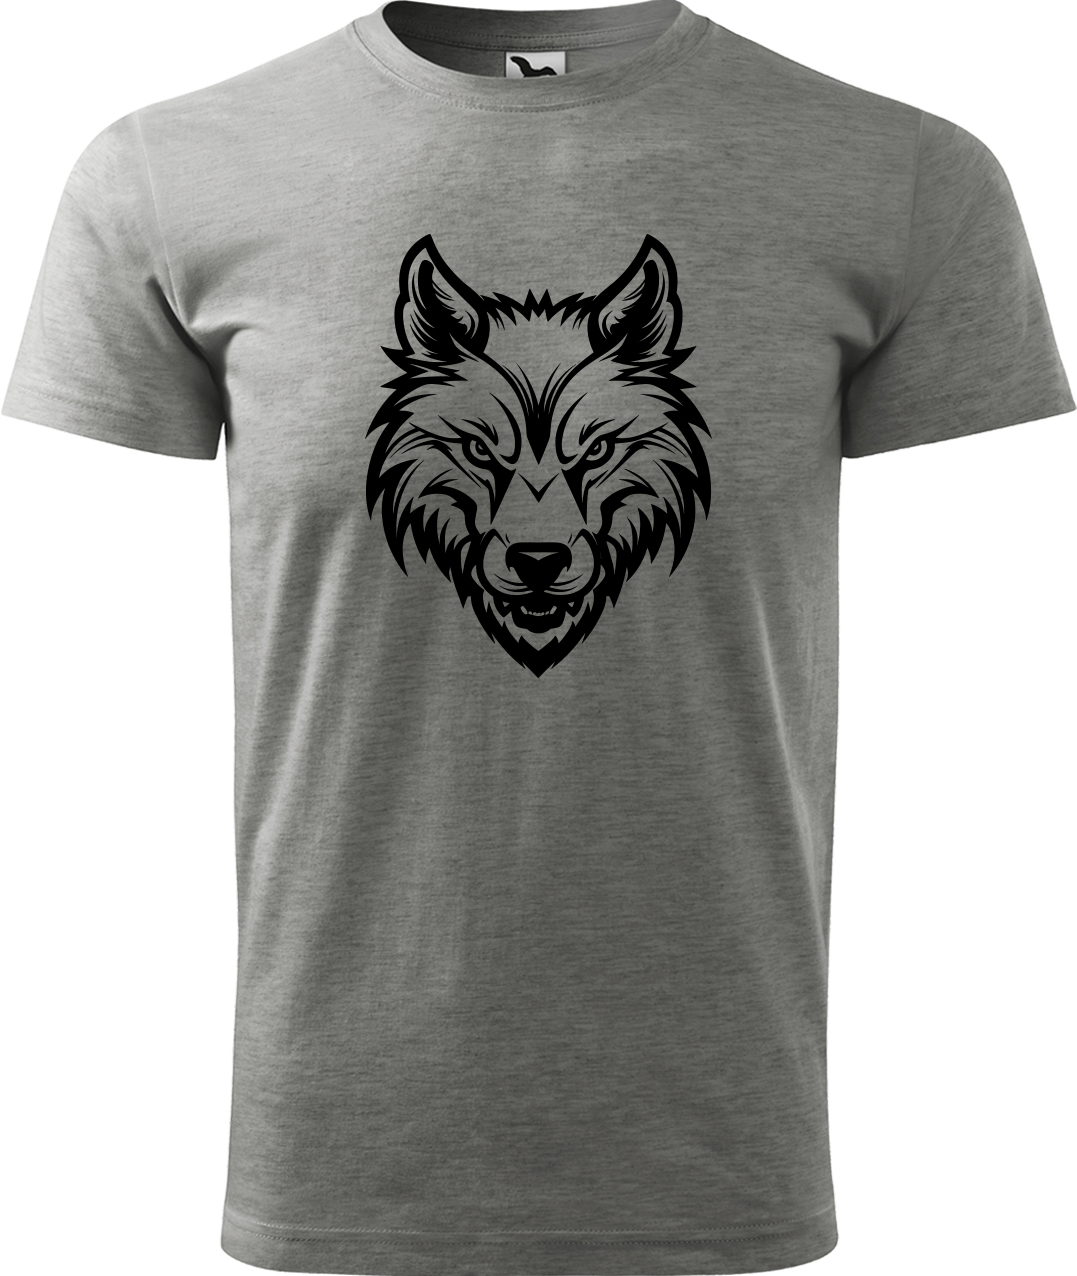 Pánské tričko s vlkem - Alfa samec Velikost: L, Barva: Tmavě šedý melír (12), Střih: pánský